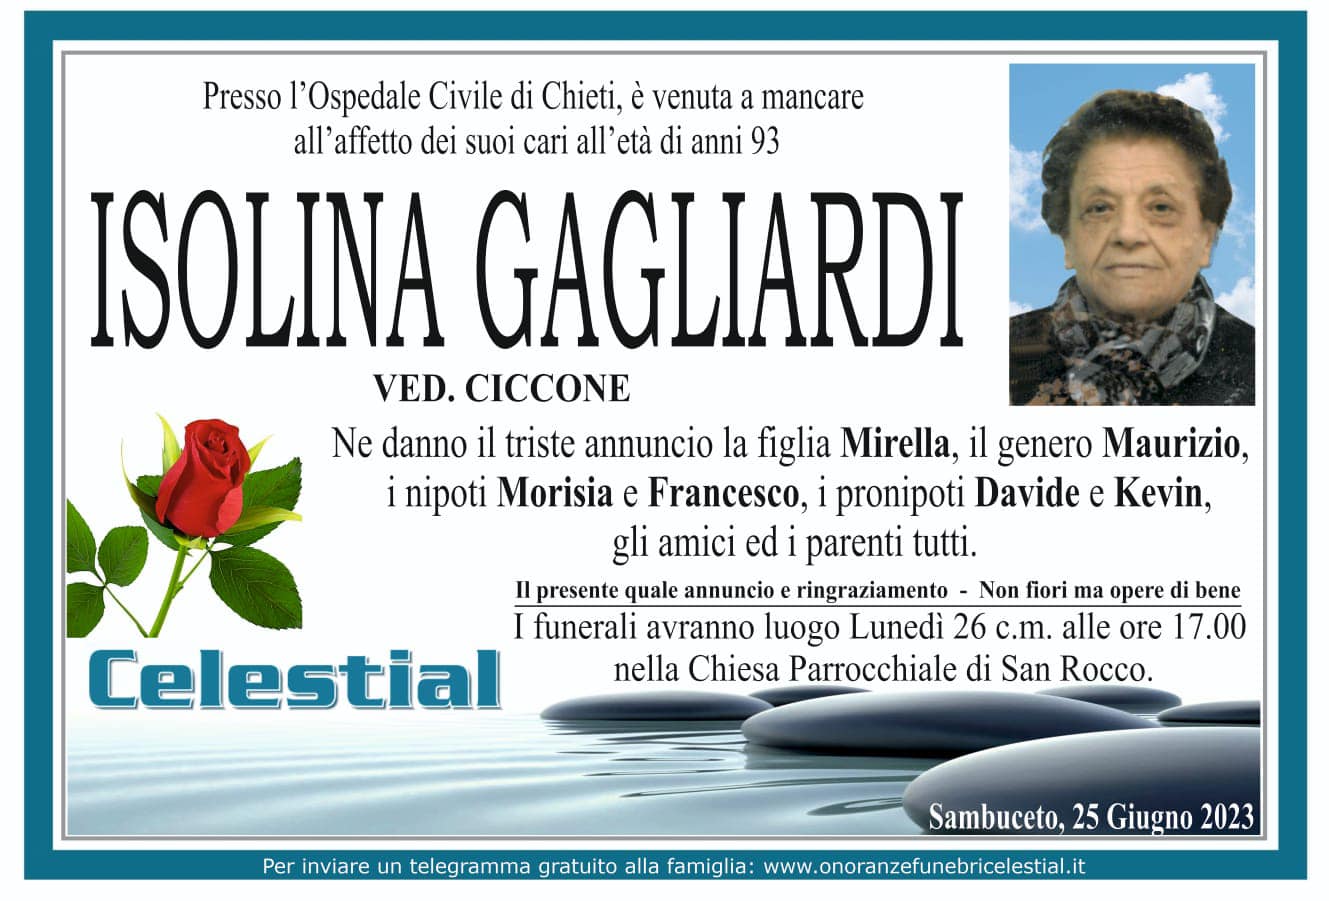 Isolina Gagliardi